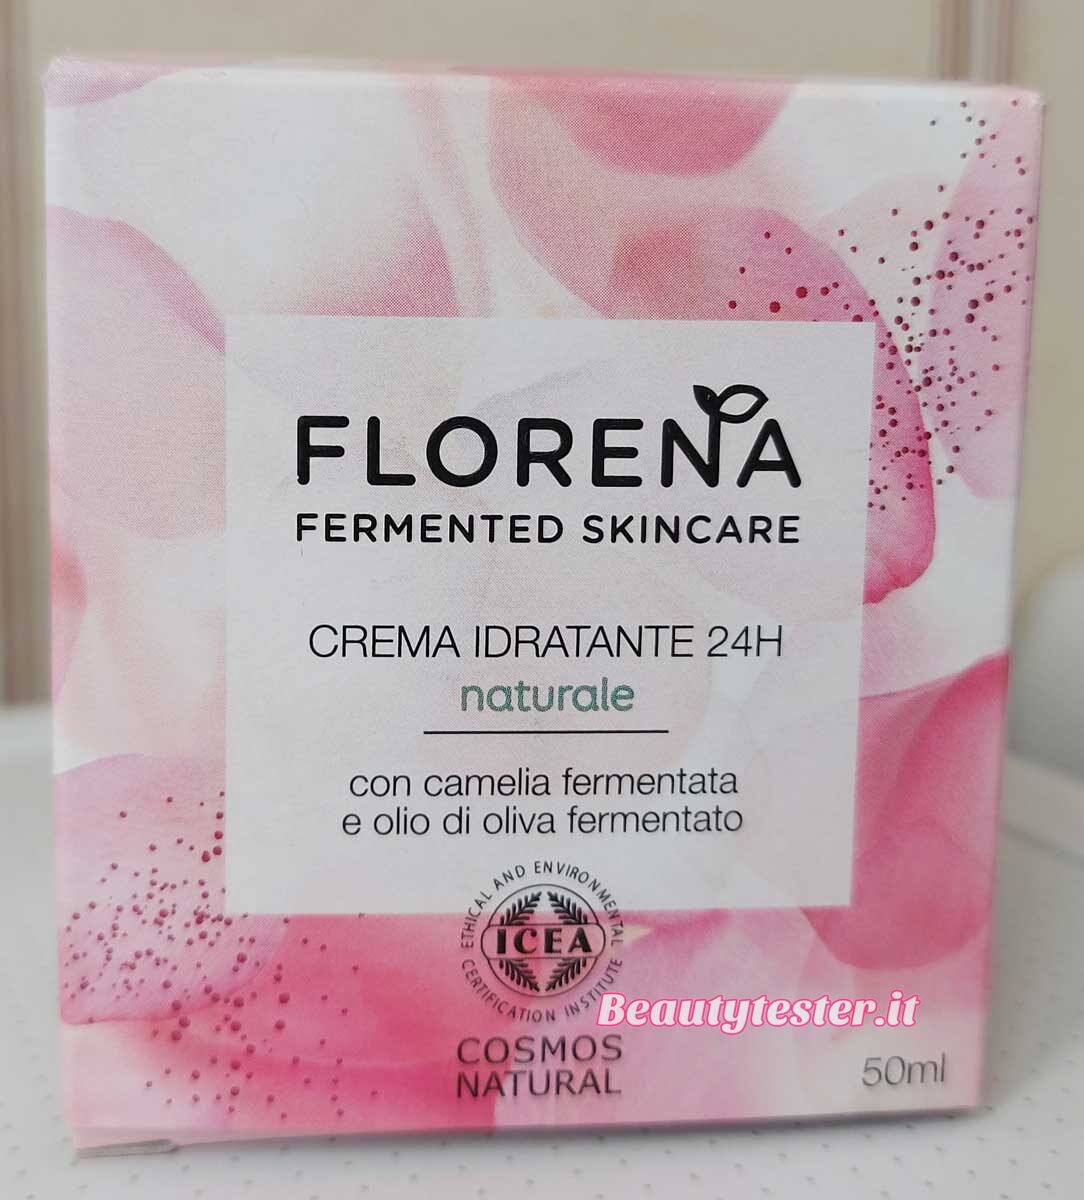 FLORENA Fermented Skincare Crema idratante 24h naturale